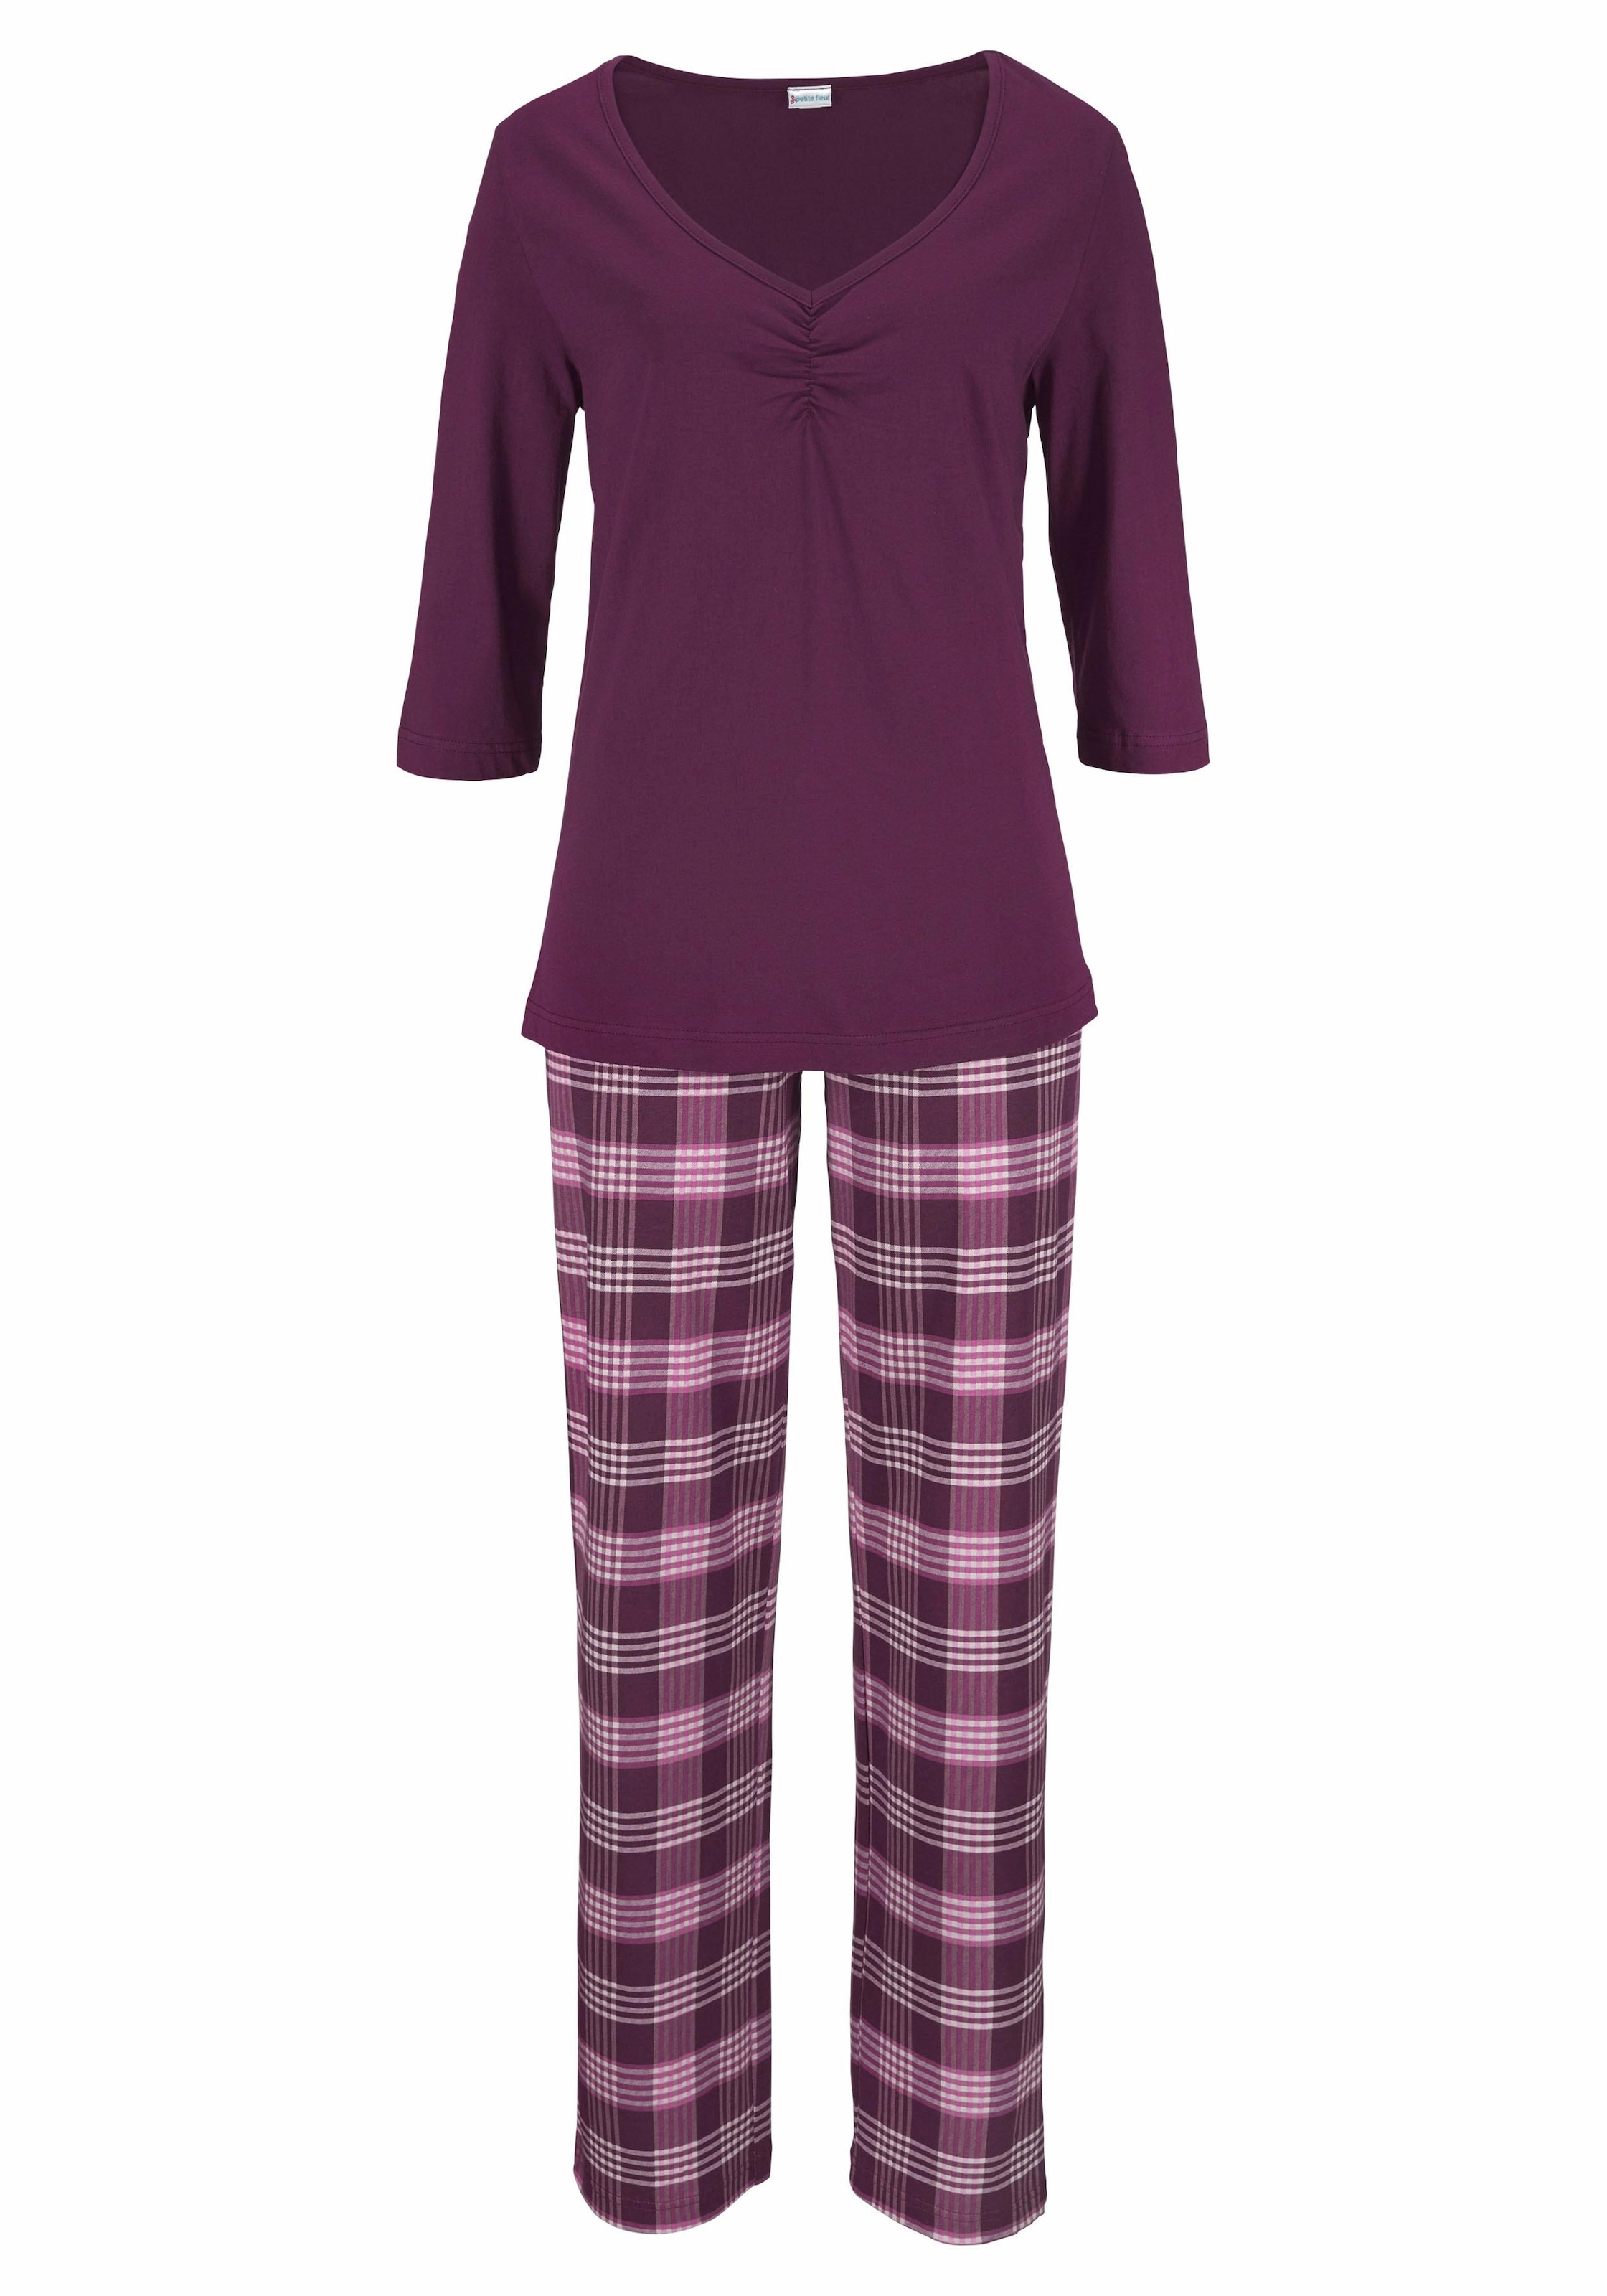 petite fleur Pyjama (4 Hose 2 Stück) mit karierter tlg